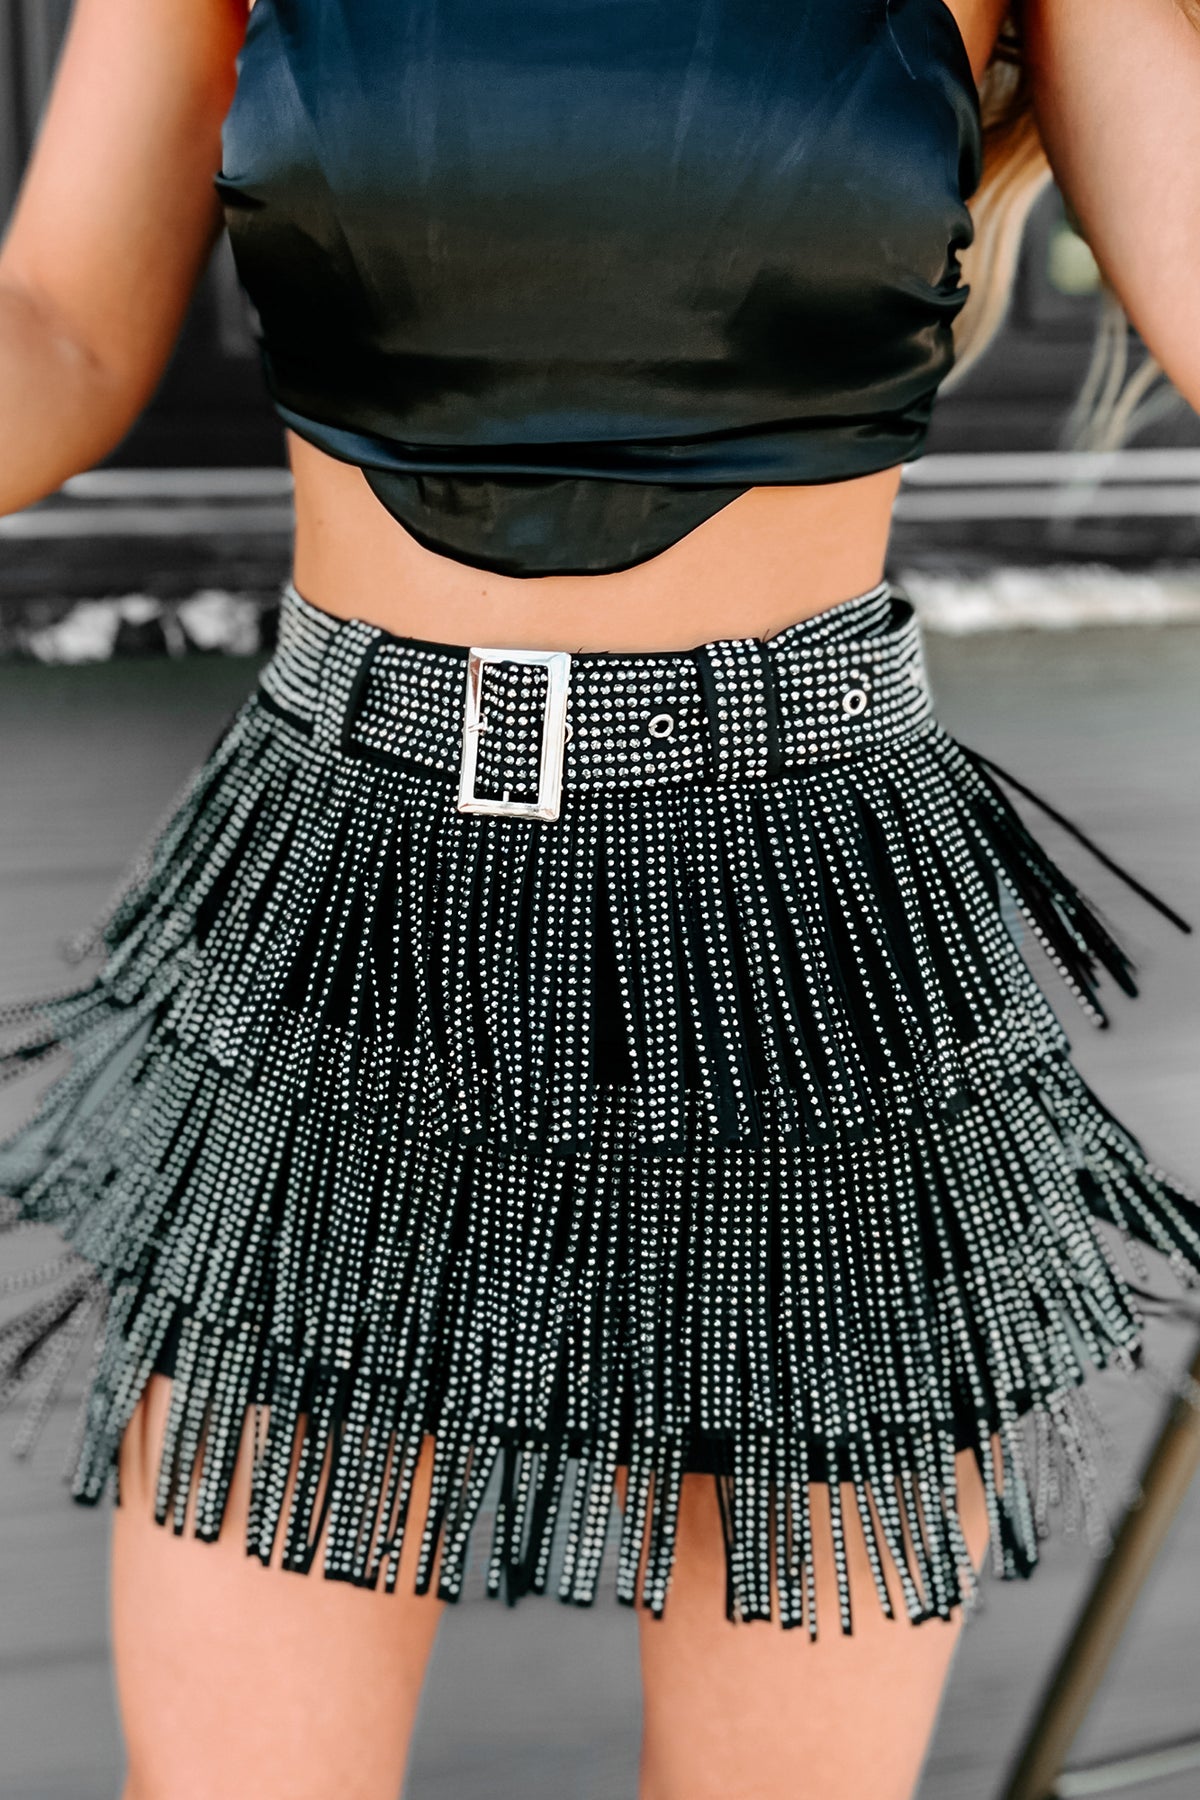 Shop It's Showtime Rhinestone Fringe Mini Skirt (Black) Kiwi and